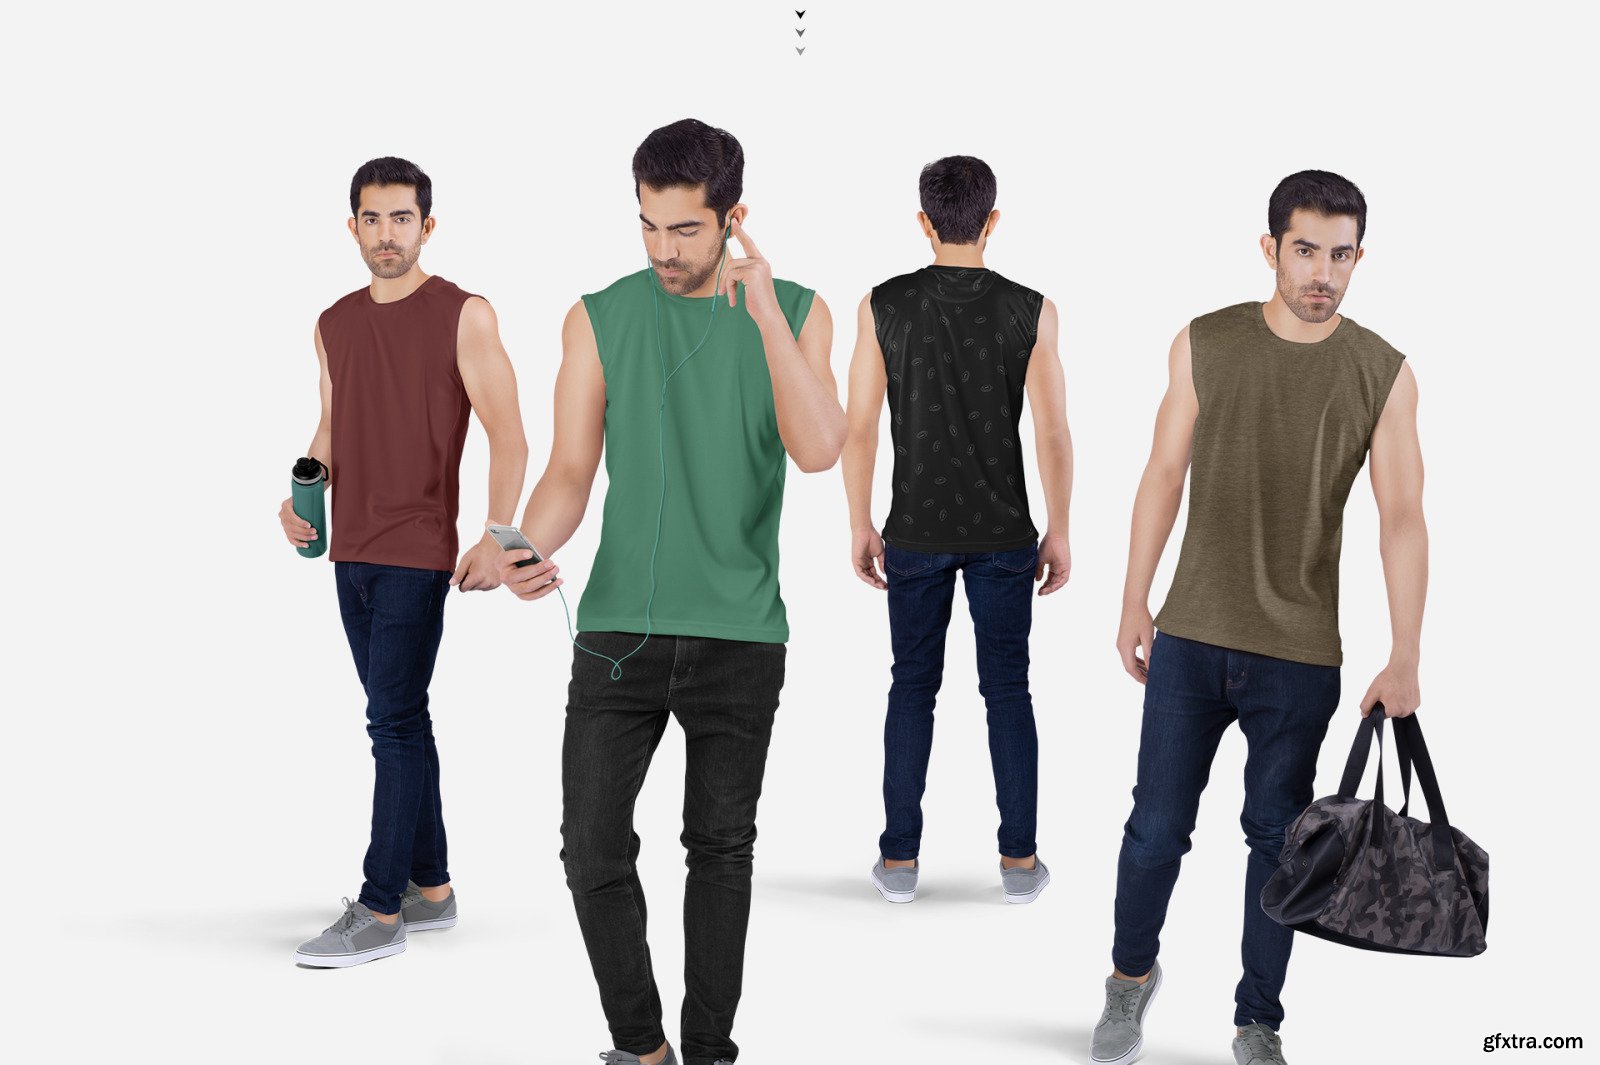 Men's Sleeveless Shirt Mockup Set » GFxtra